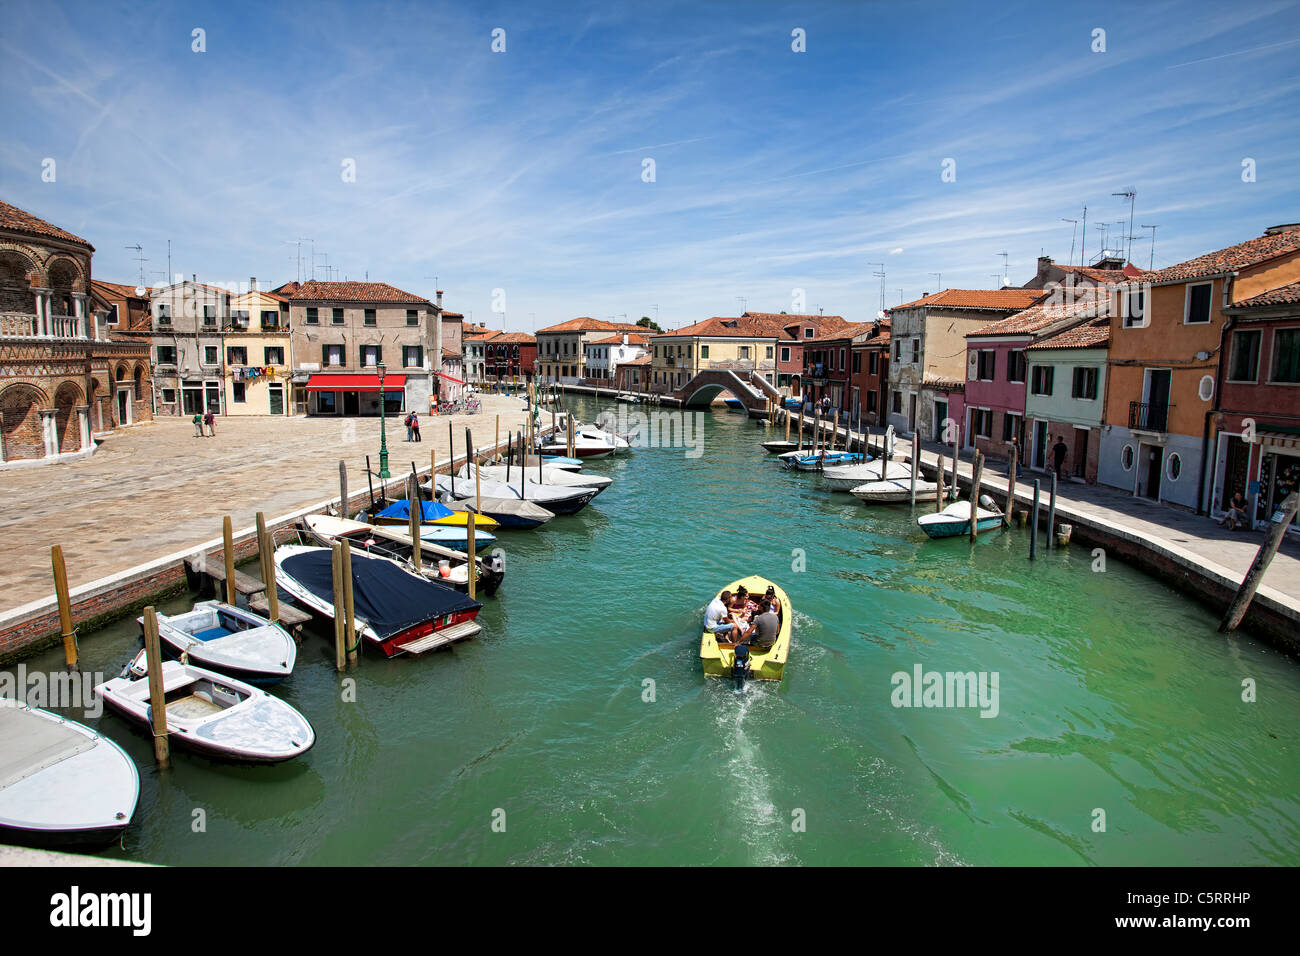 Murano Insel großen Kanal zwischen bunten historischen Altbauten.  Boote vor Anker vor Geschäft entlang des Kanals. Stockfoto